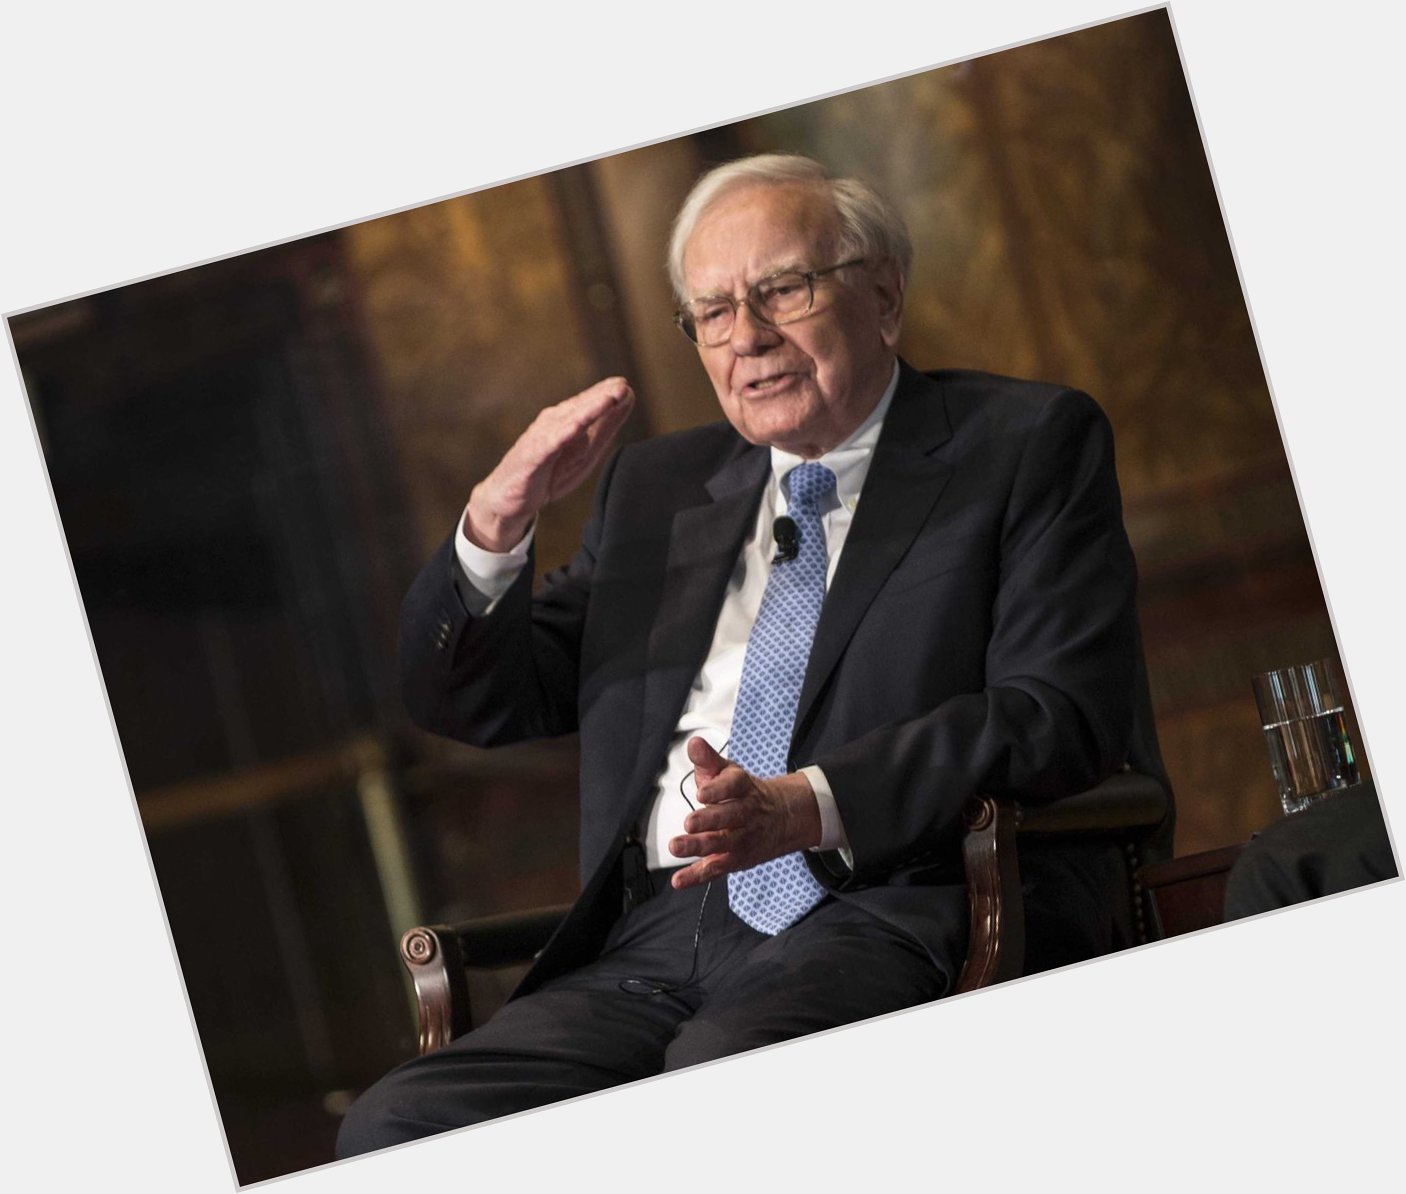 Happy Birthday to Warren Buffett who turns 87 today! 